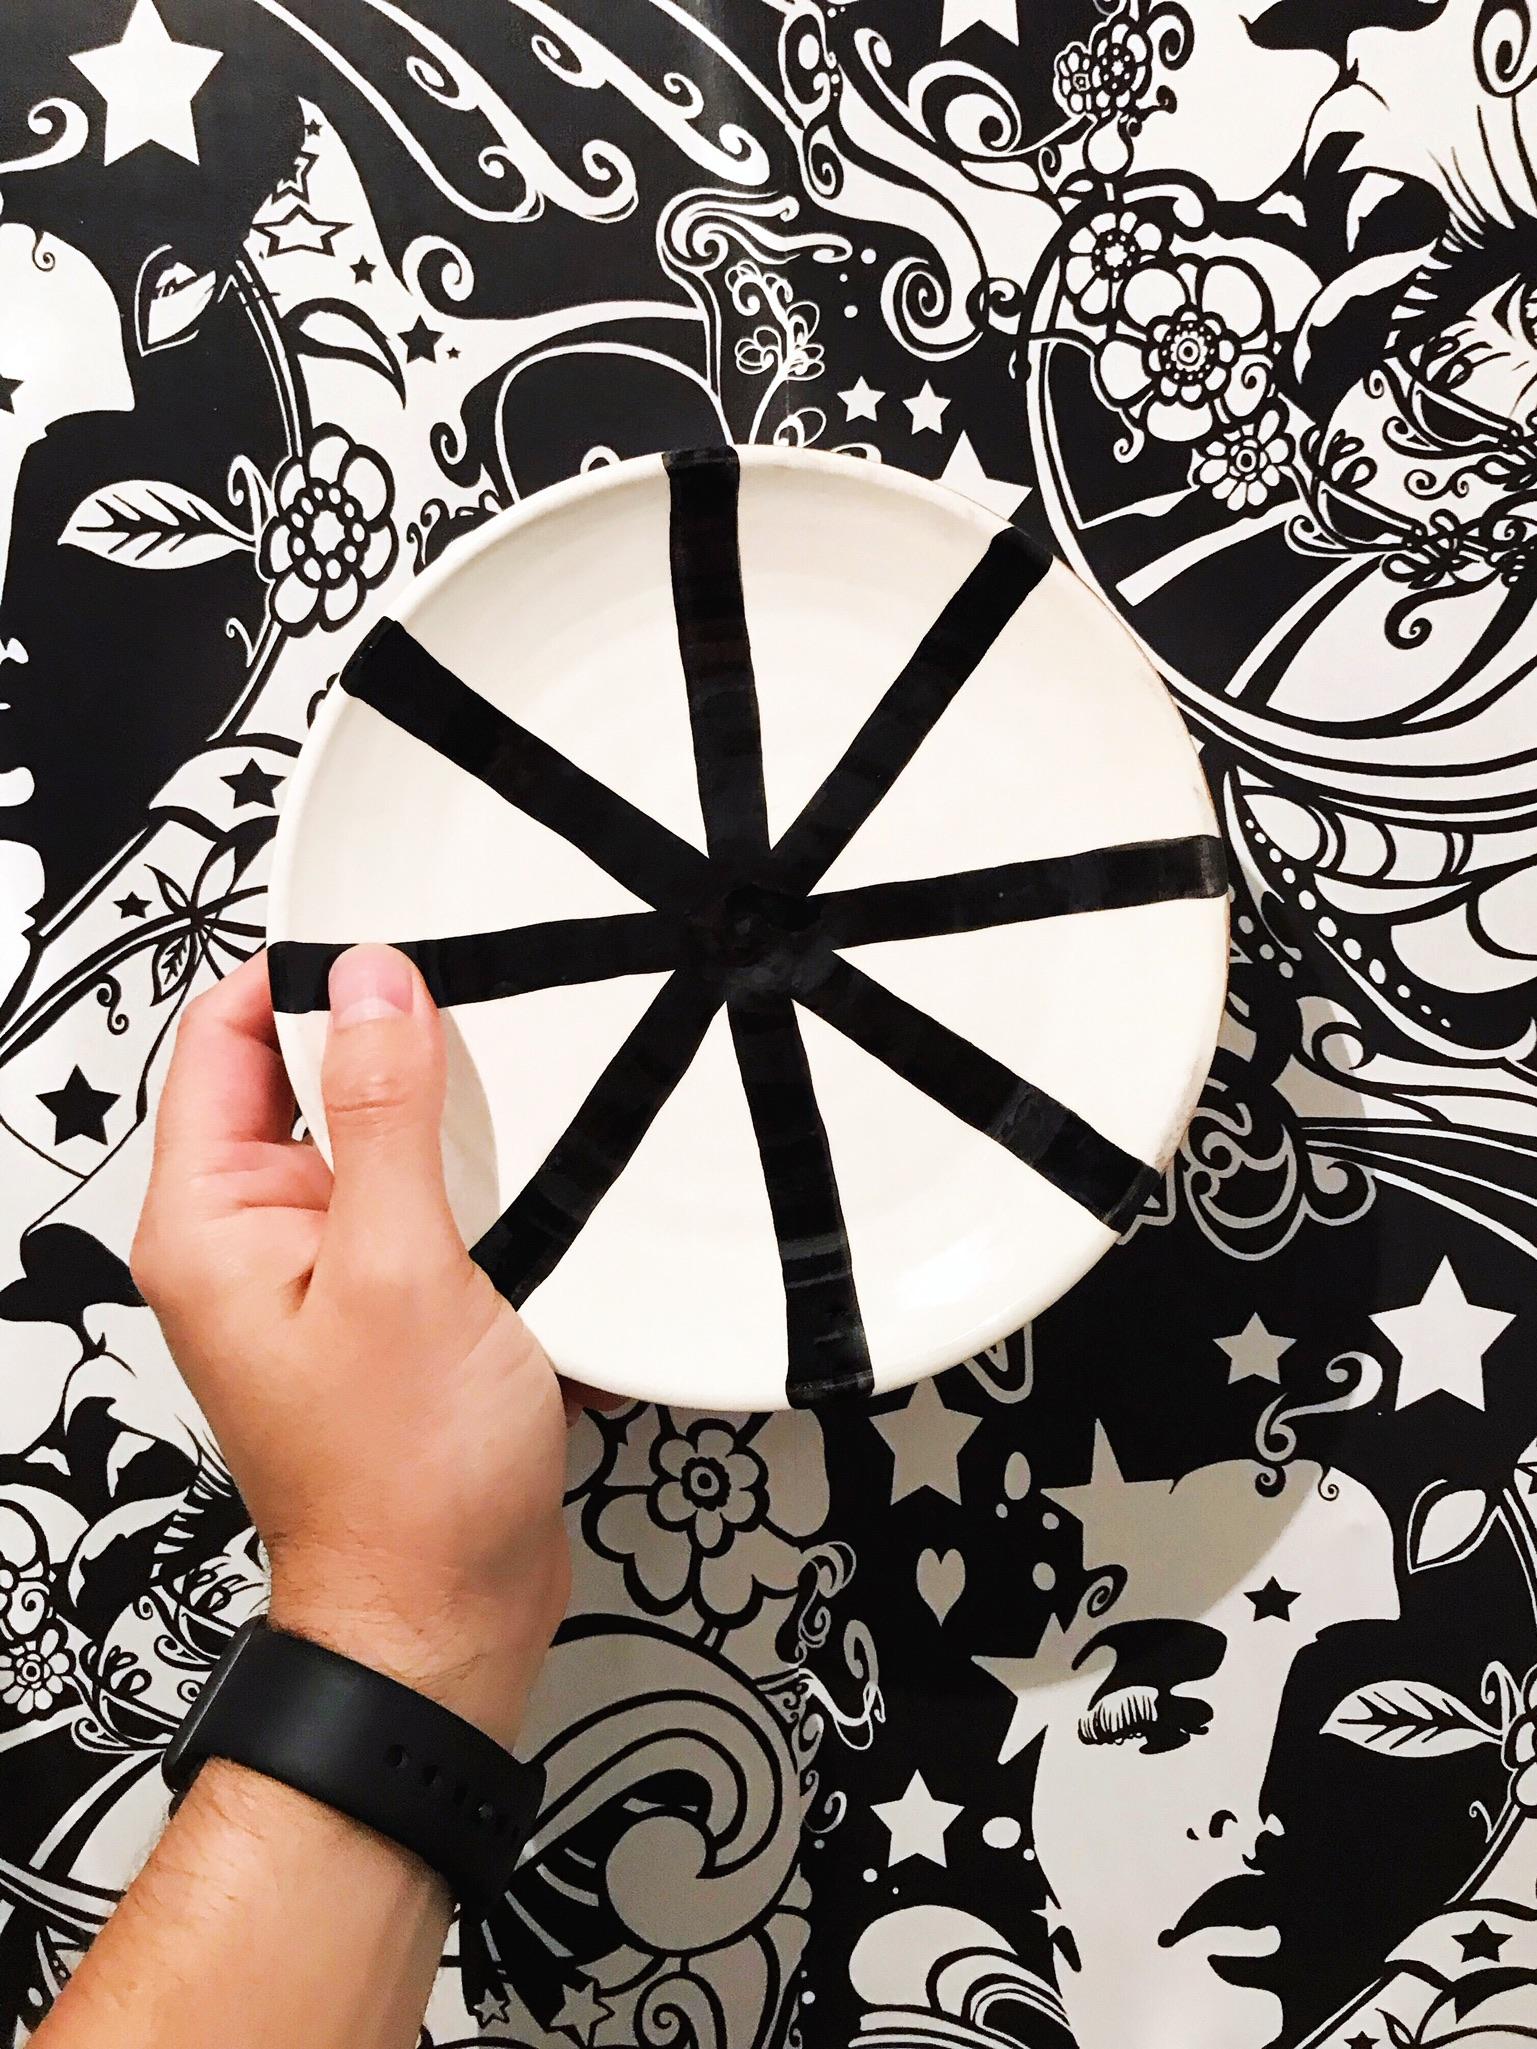 Contemporary Handmade Ceramic Segment Salad Plate with Graphic Black & White Design, in Stock